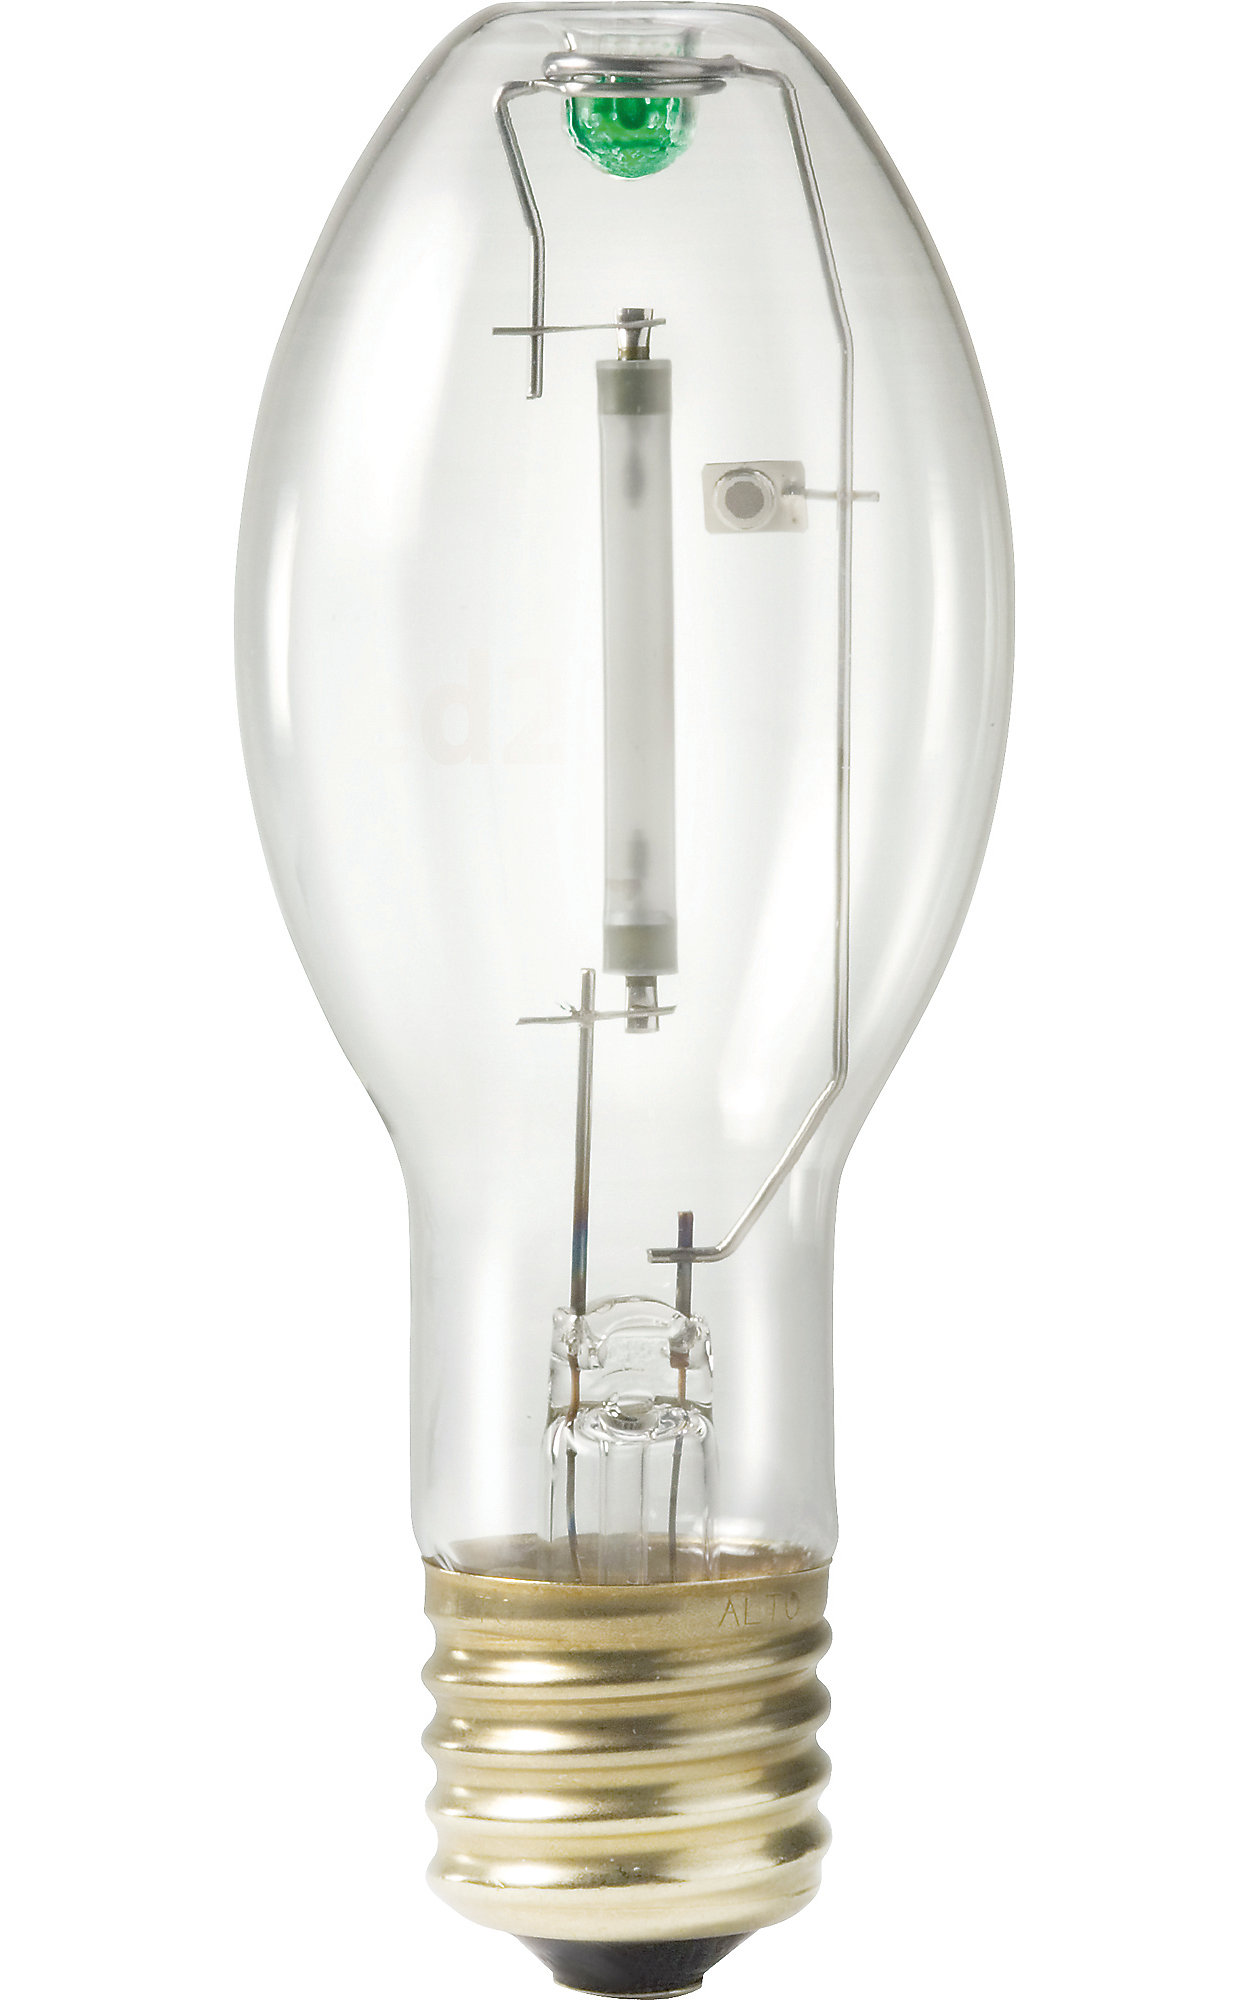 2 new Ceramalux C150S55 HPS Hi Pressure Sodium Light Bulb Lamp MOGUL 150W 55V 